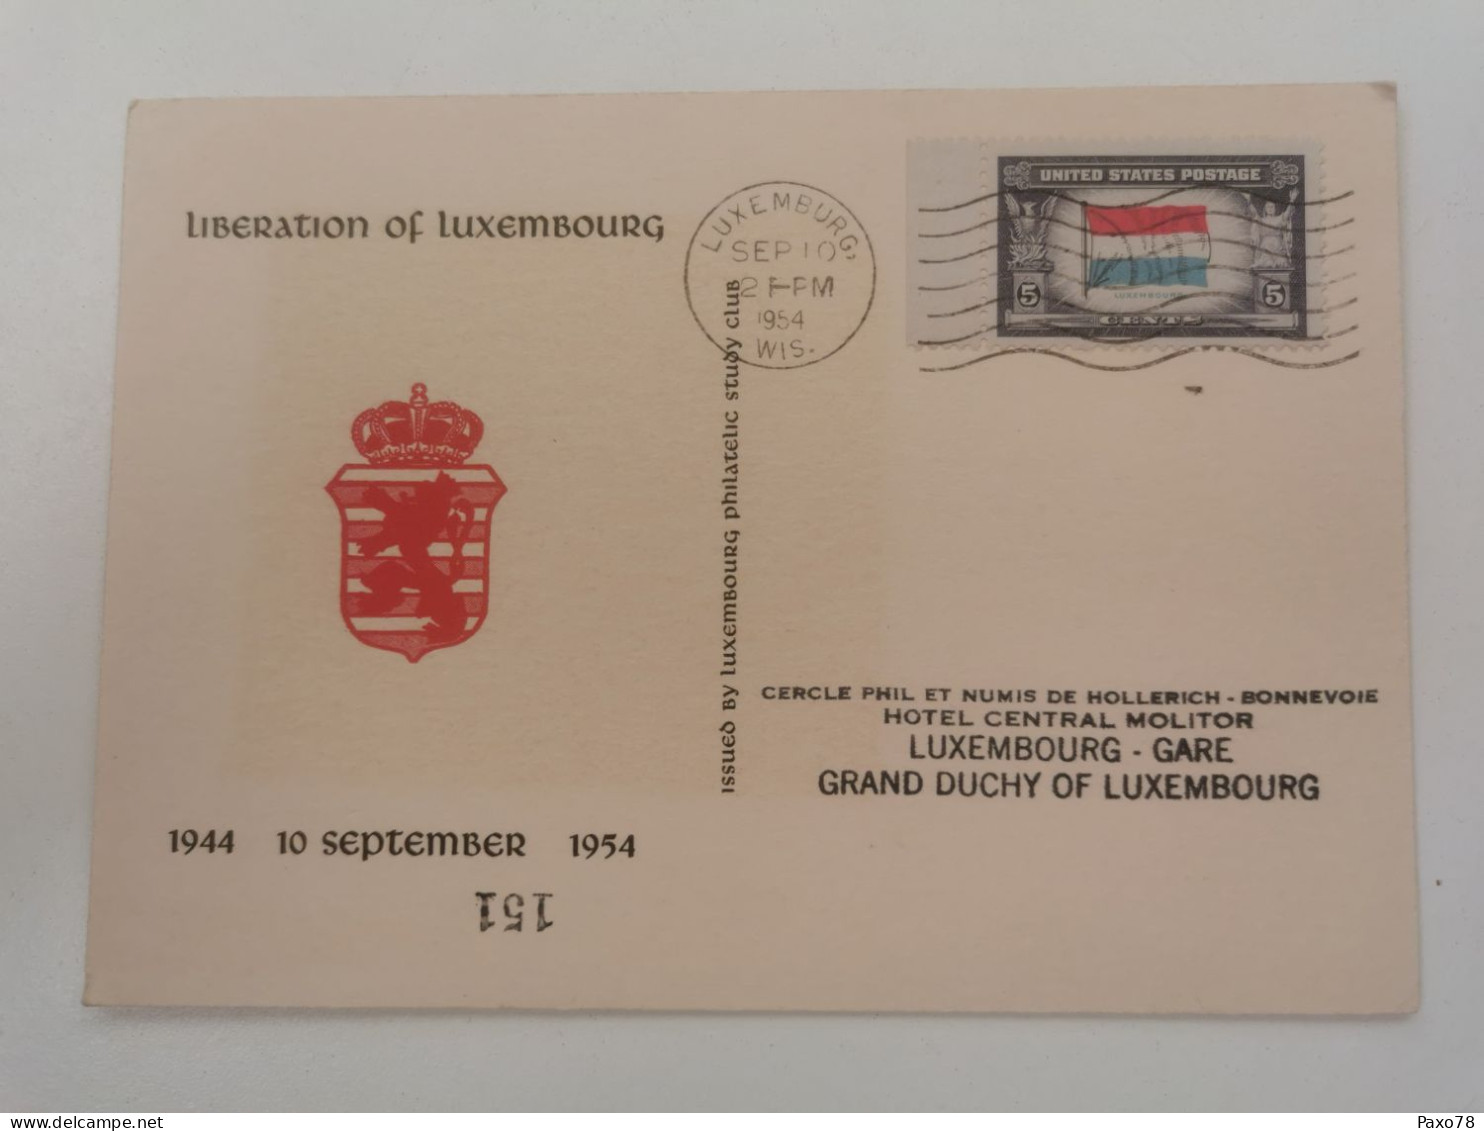 Luxembourg, Libération Du Luxembourg WW2 - Commemoration Cards